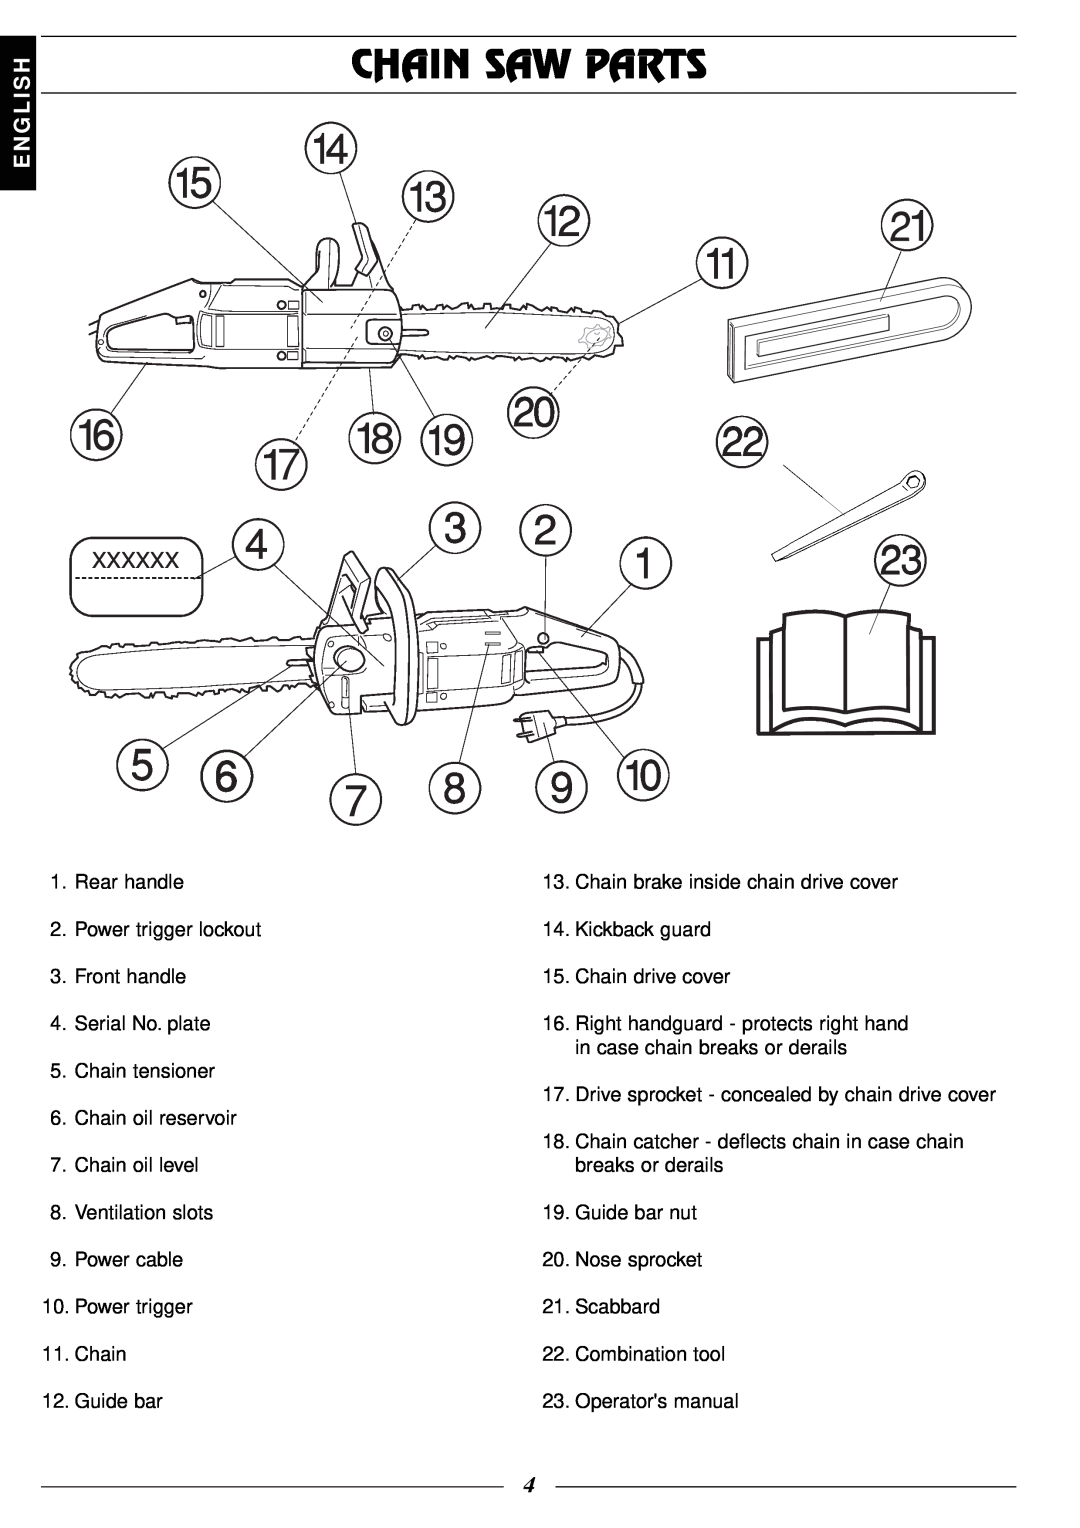 Husqvarna 316 manual Chain Saw Parts, E N G L I S H, Xxxxxx 